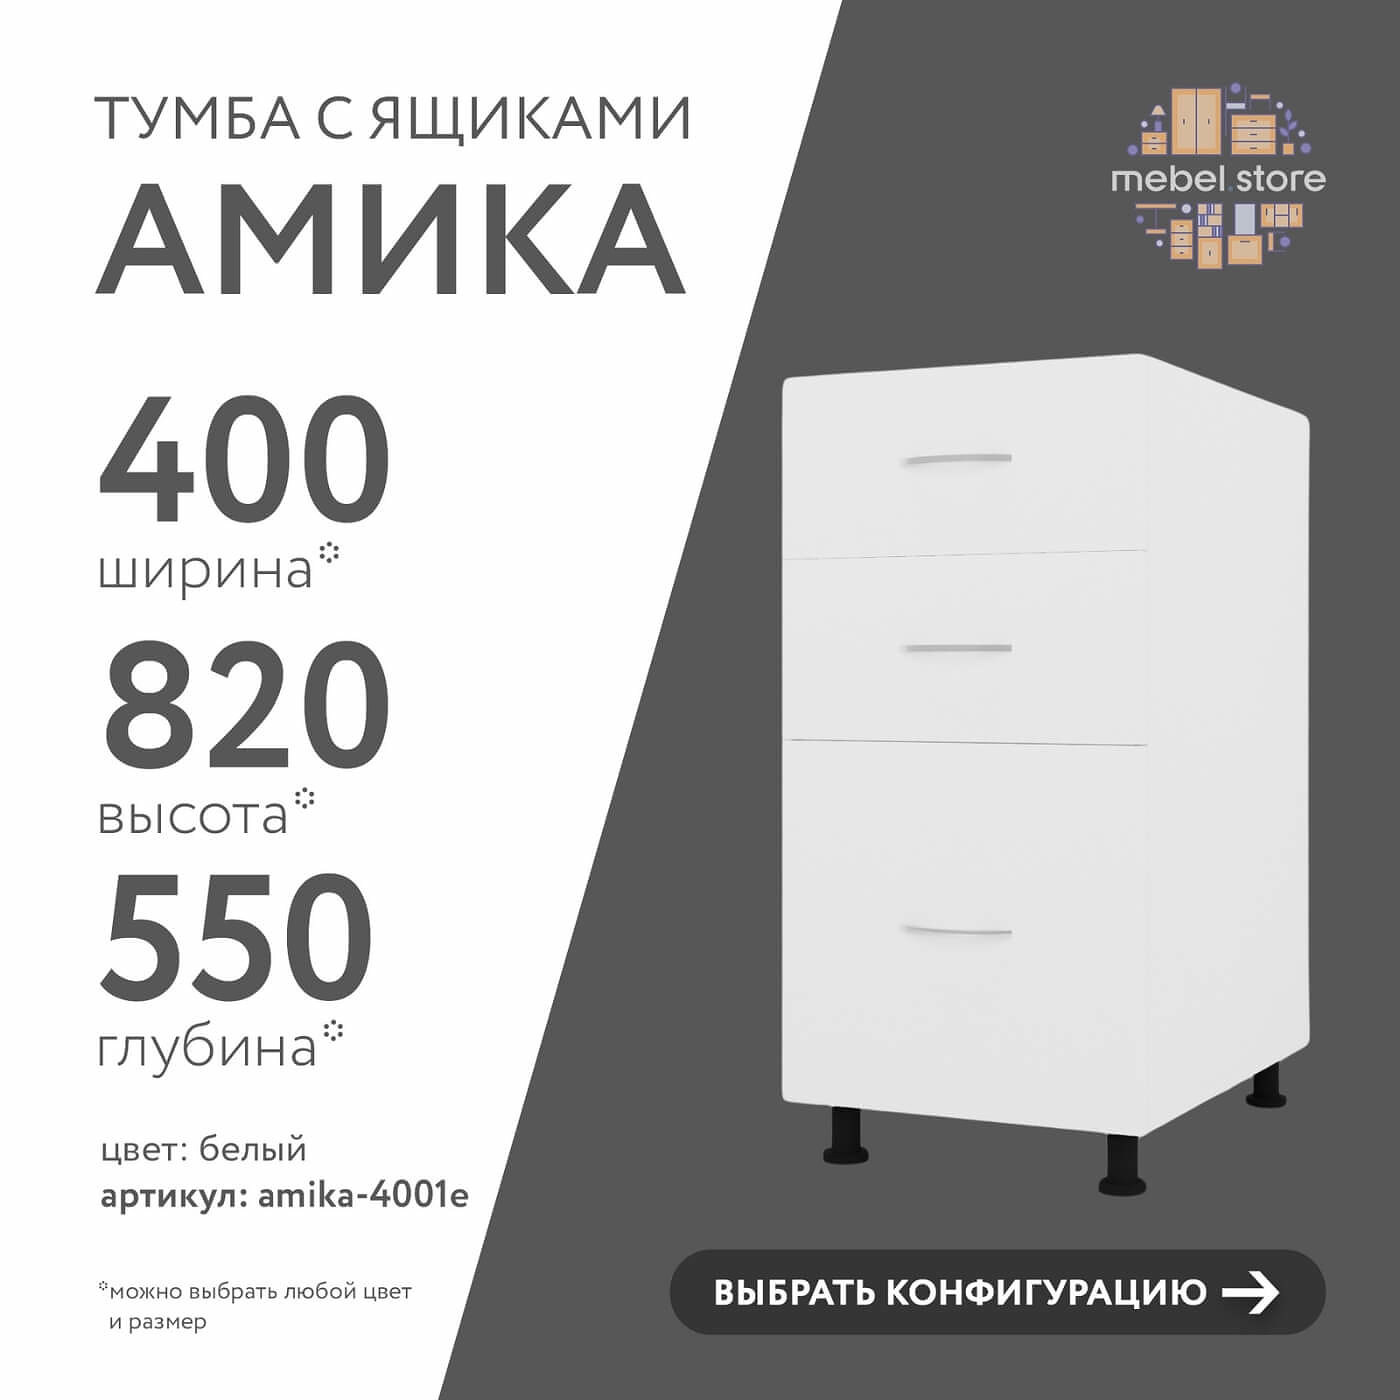 Тумба напольная Амика-4001e минимализм для кухни - фото 1 large